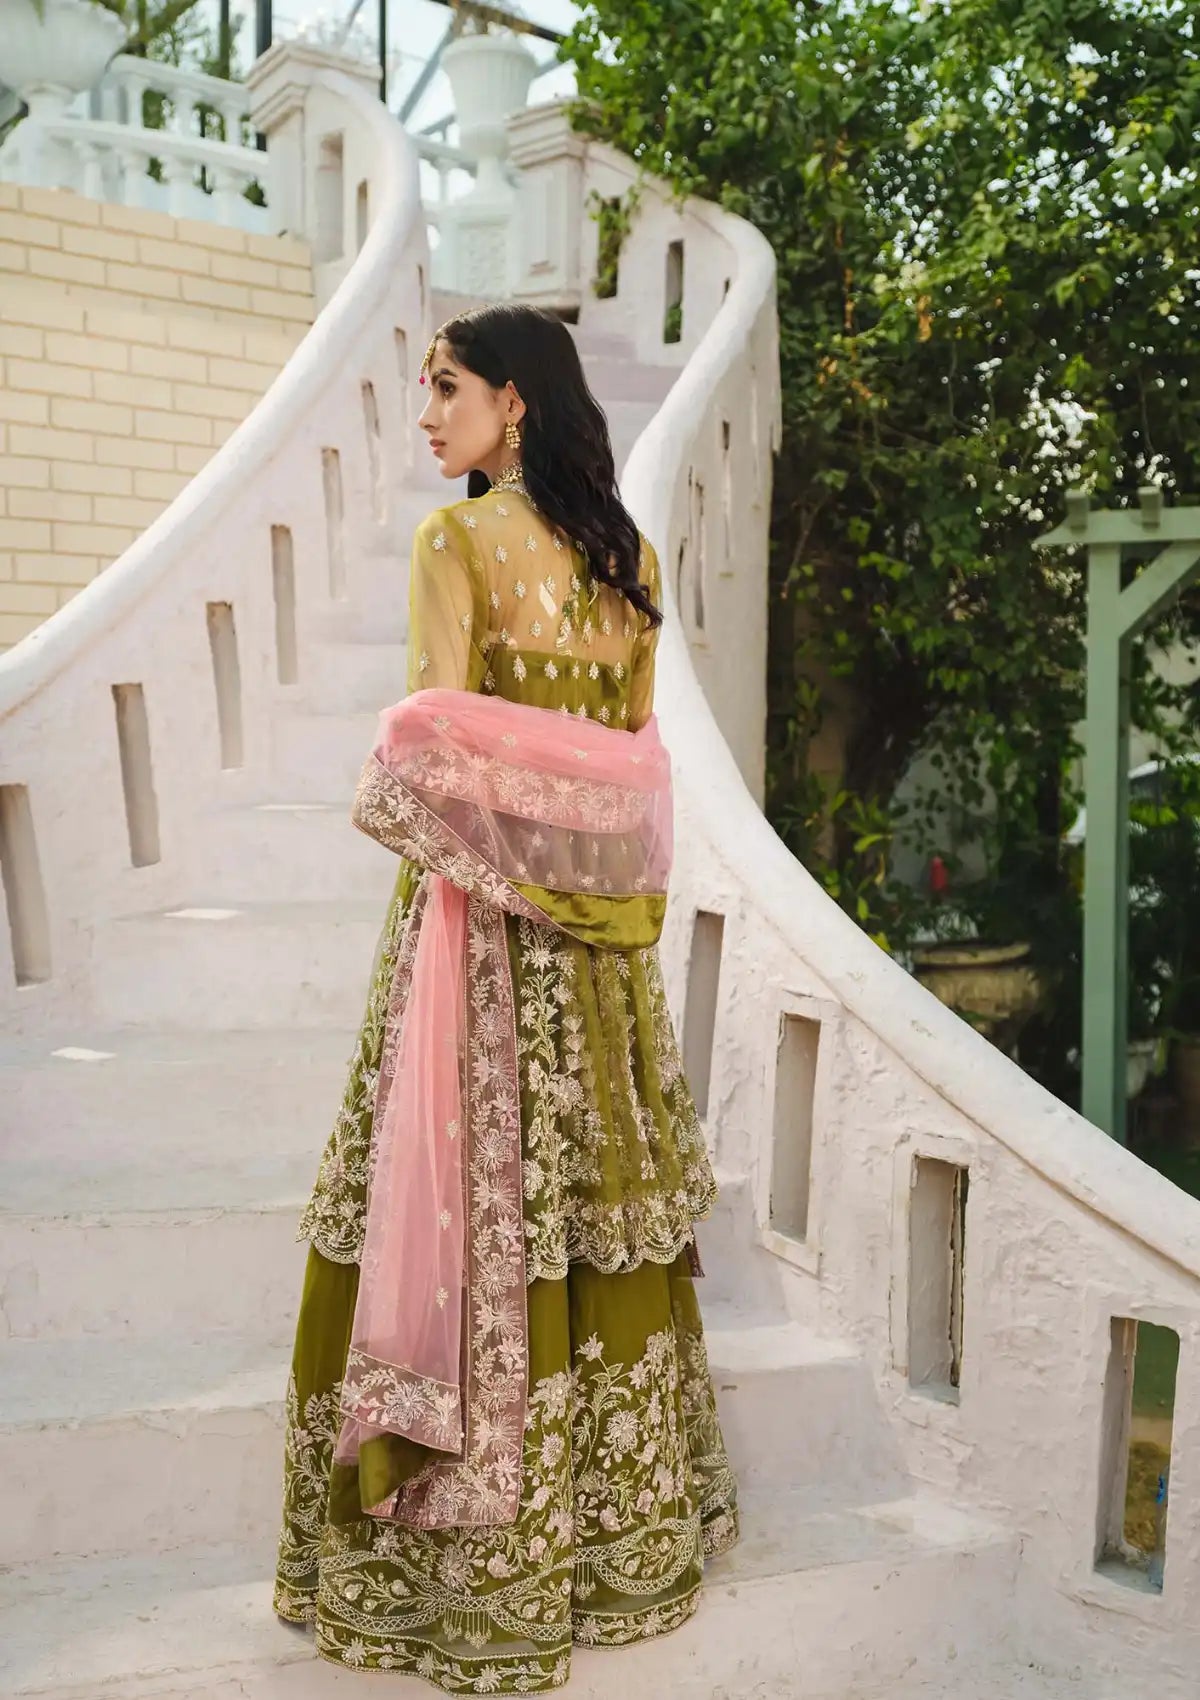 Nuriya Luxury Formals Pret (Yesil) is available at Mohsin Saeed Fabrics online shop All the top women brands in pakistan such as Freesia, Maria b, Zara Shahjahan, Asim Jofa, Zaha, Elan, Crimson, Sobia Nazir, Maryam n Maria, Hussain Rehar, Marjjan, Anaya by Kiran Chaudhary, johra, Shaista, farah talib aziz and Gul Ahmed. 